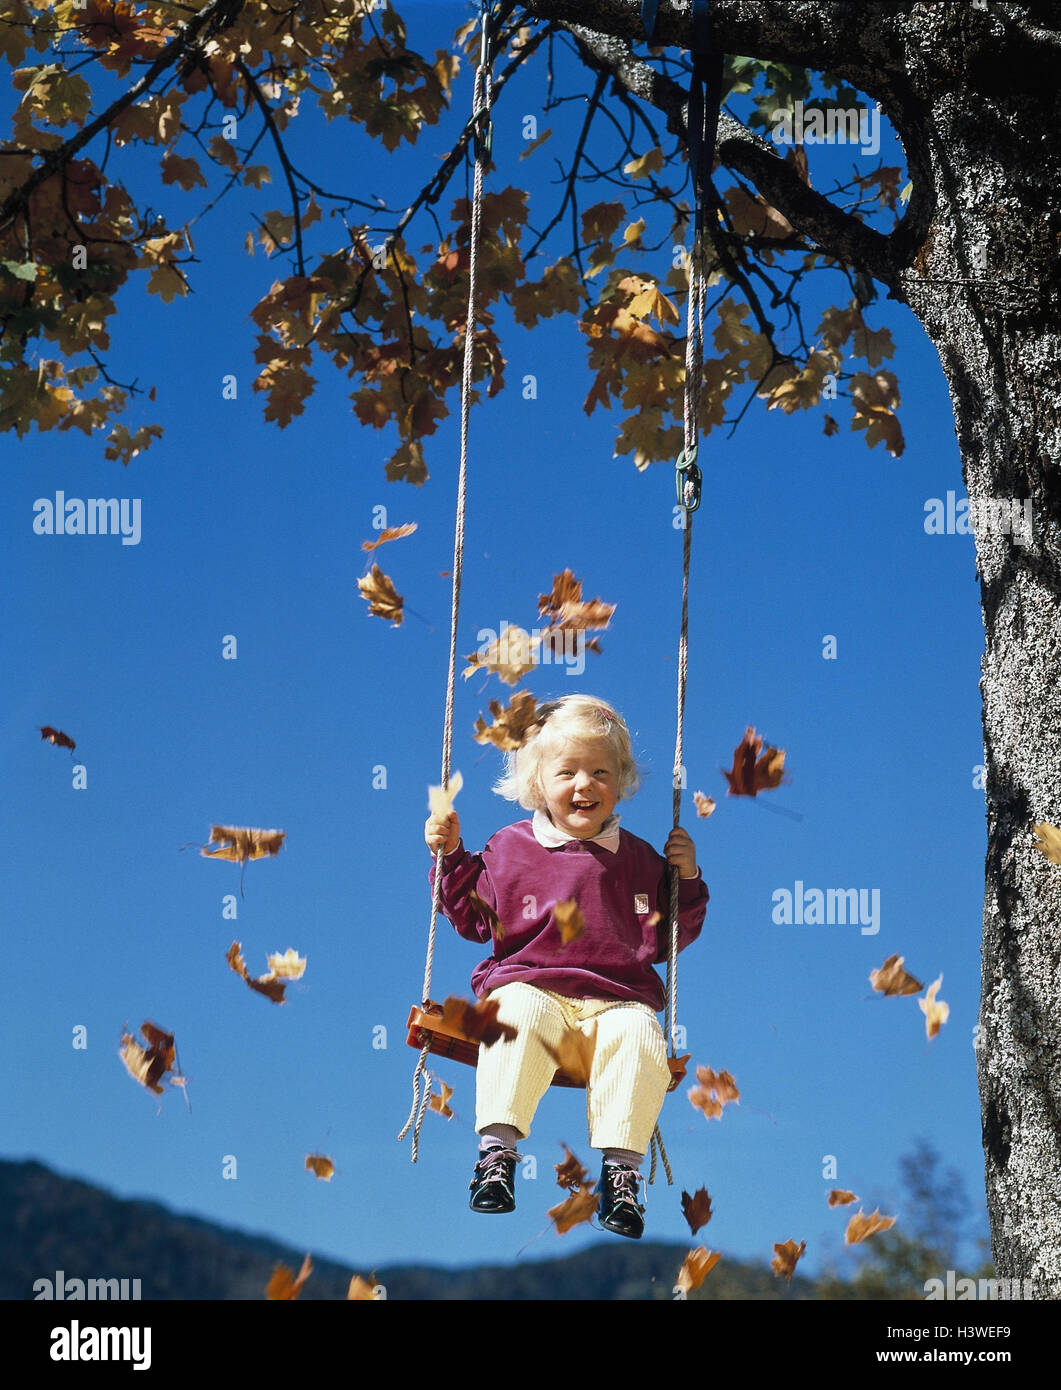 Girls, swing, autumn foliage infant, child, happy, laugh, childhood, swing, tree, broad-leaved tree, autumn leaves, leaves, foliage, autumn, outside Stock Photo